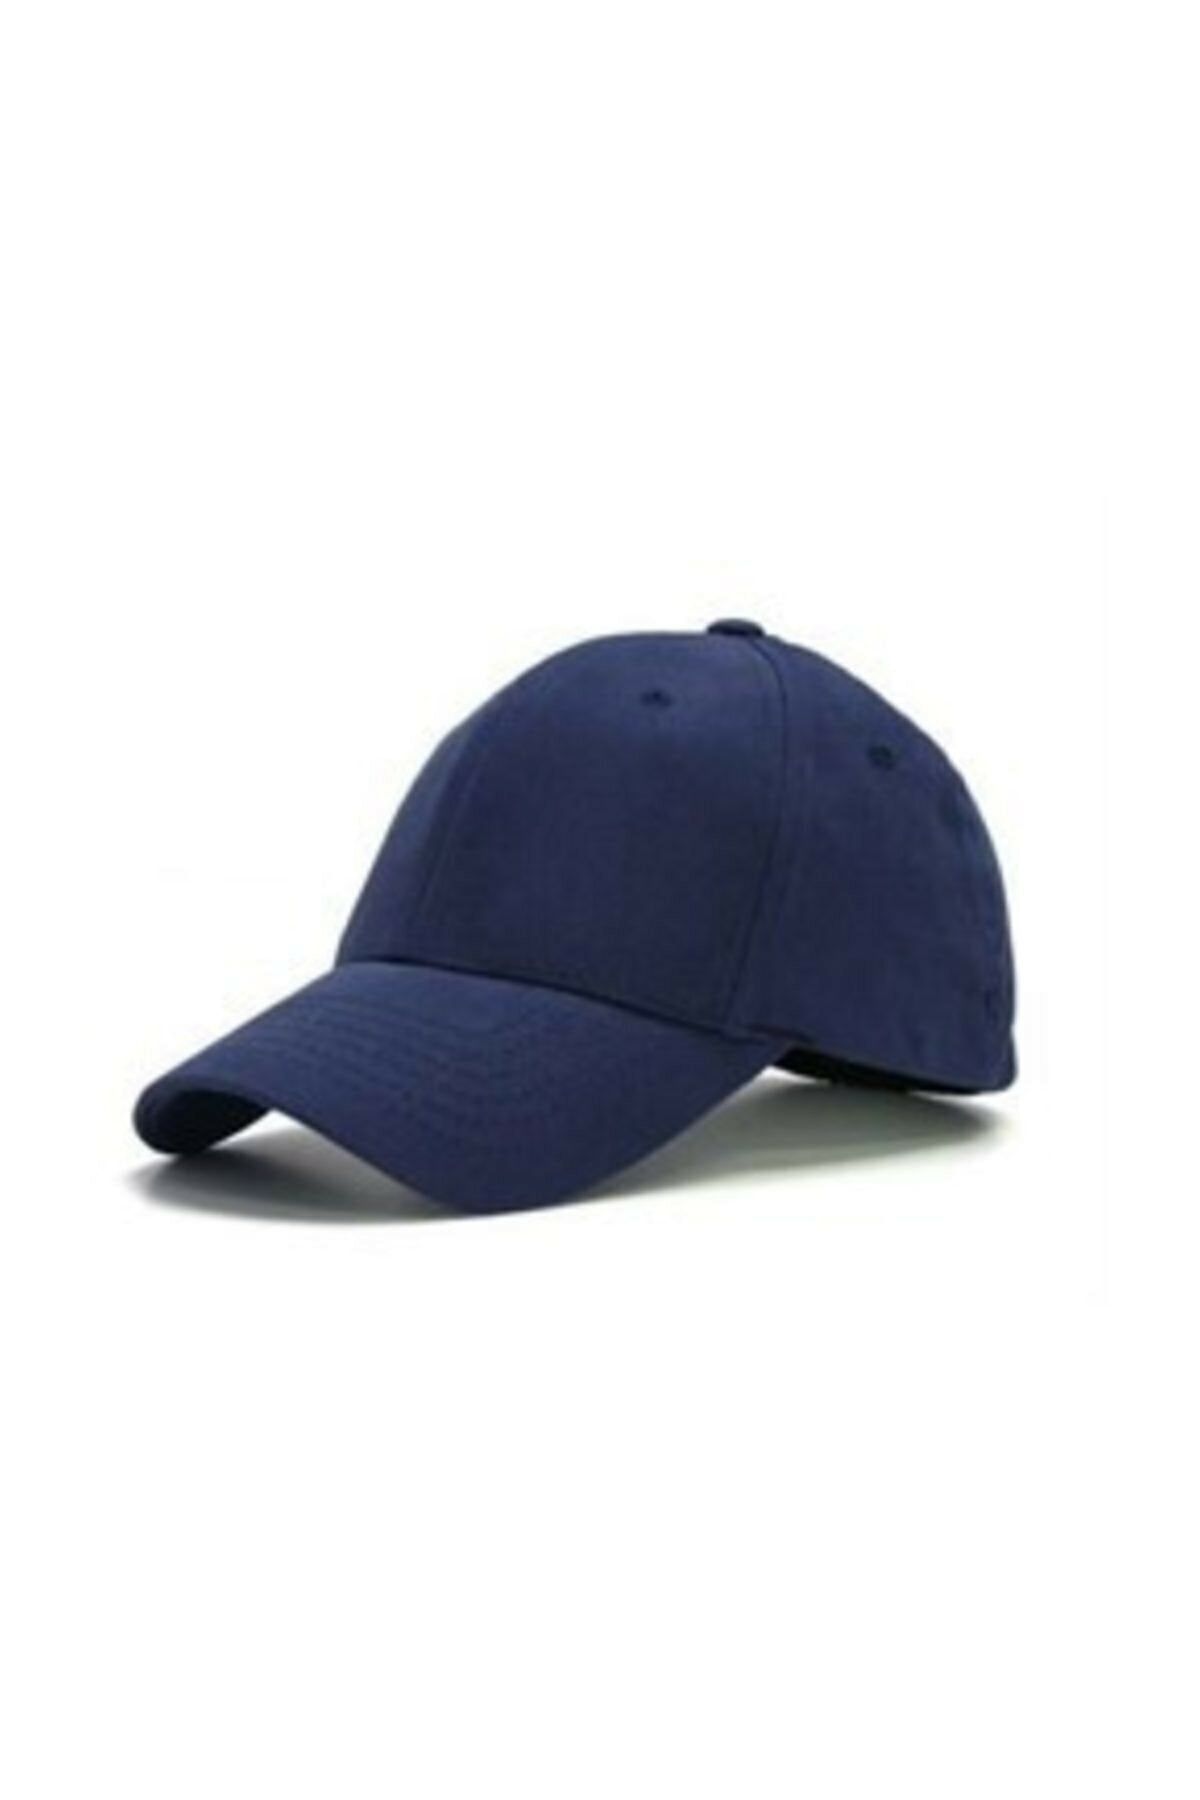 salarticaret Lacivert Düz Renk Unisex Şapka